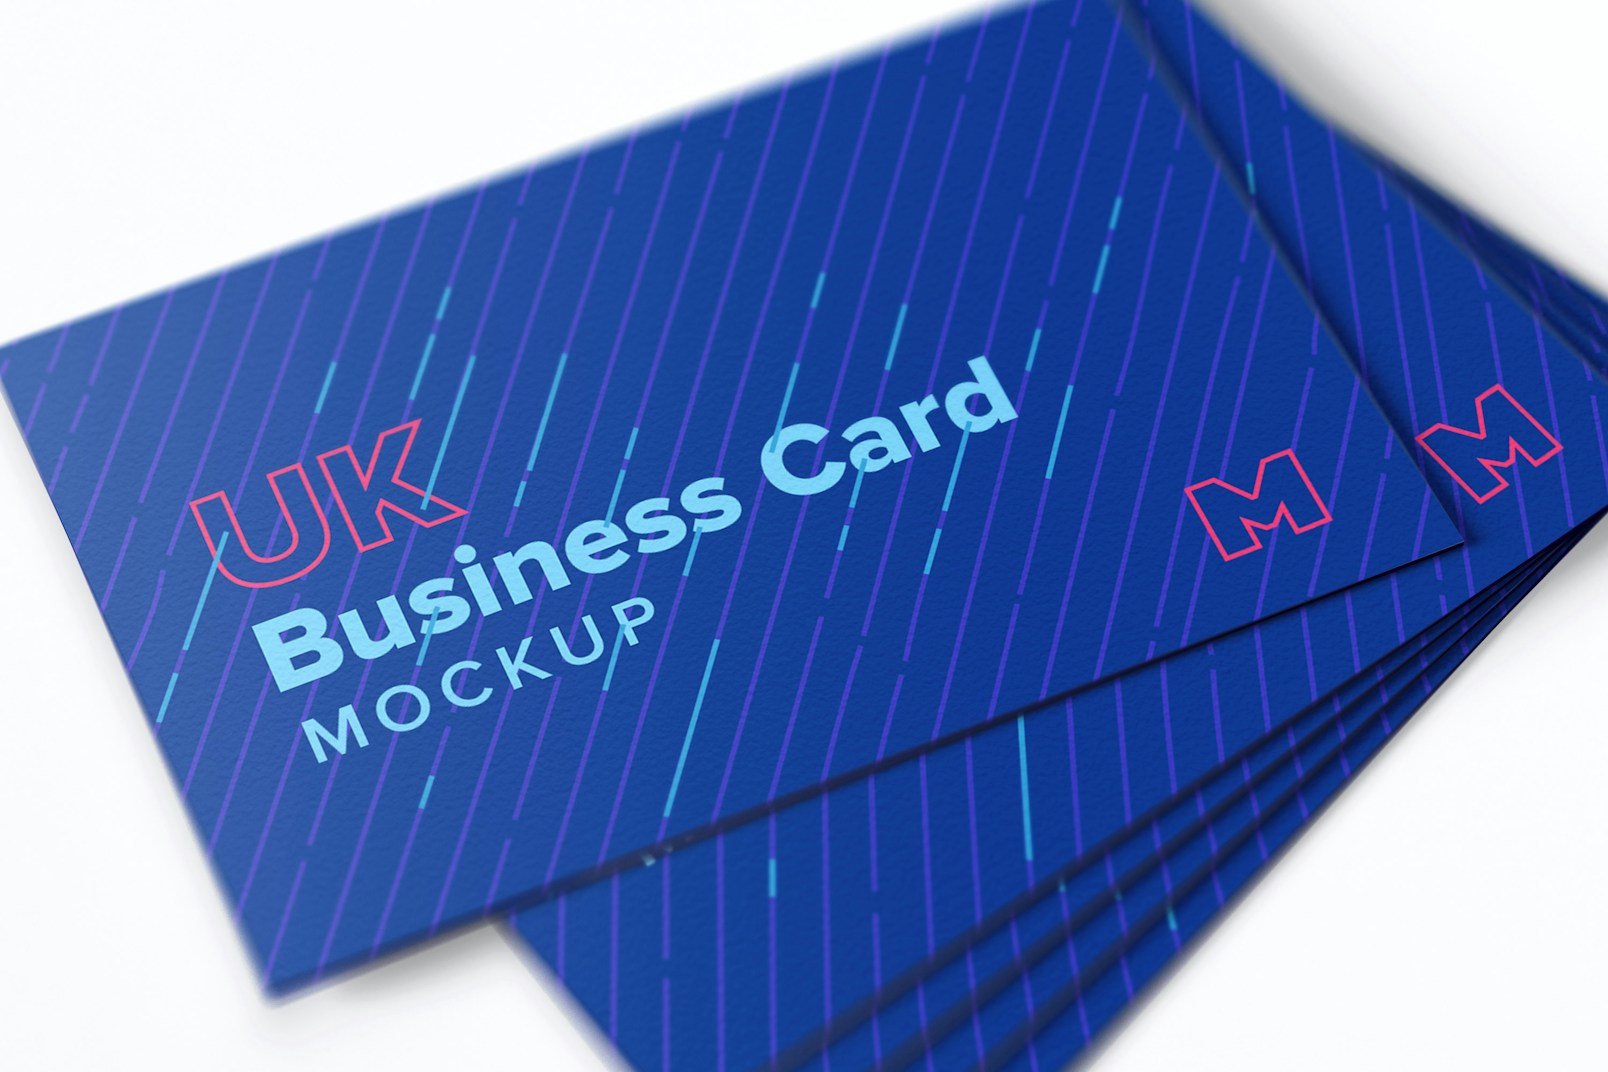 UK Business Cards Mockup 04